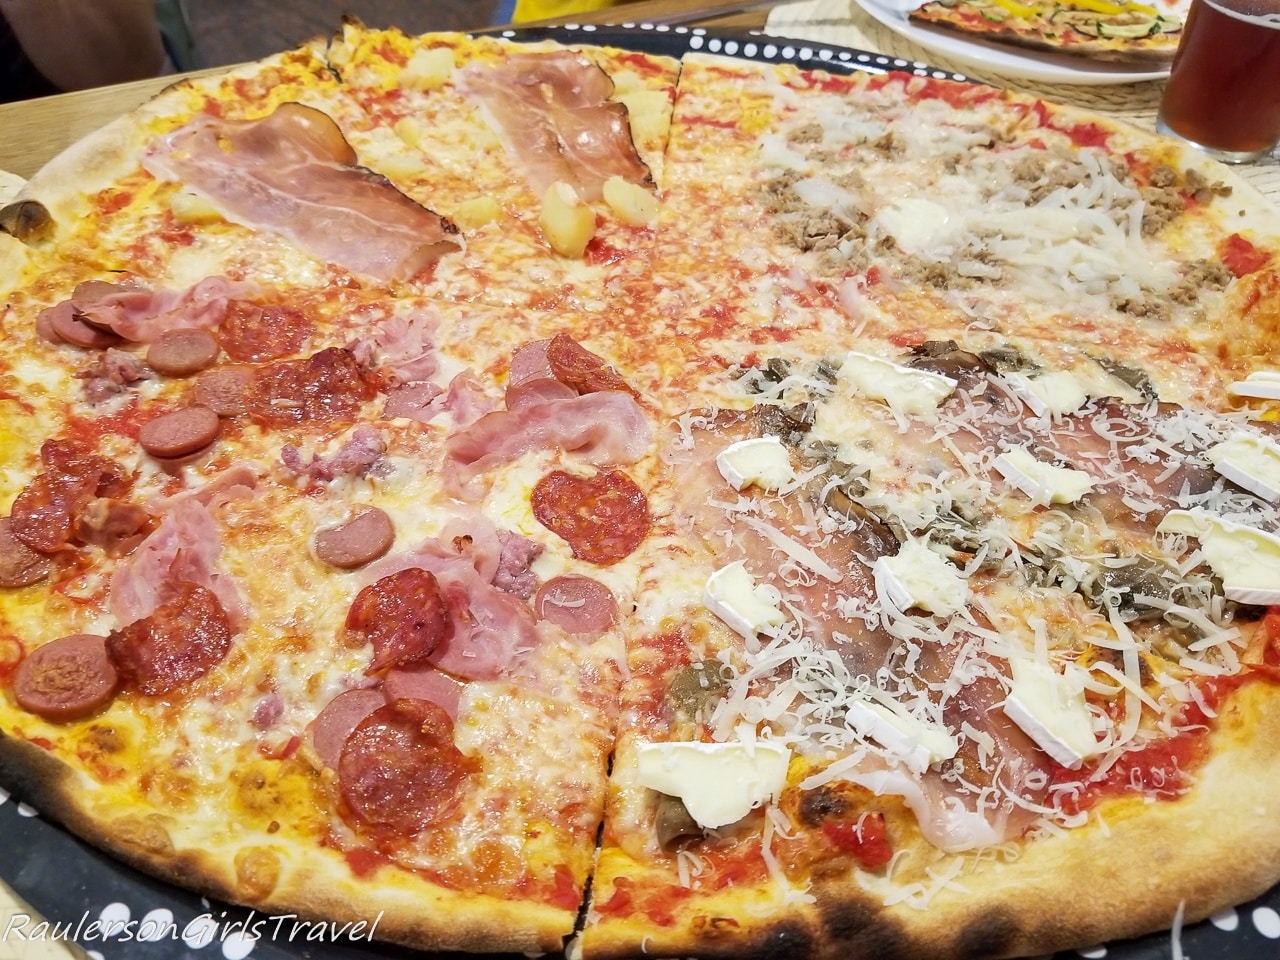 Pizza at #pizzaroad